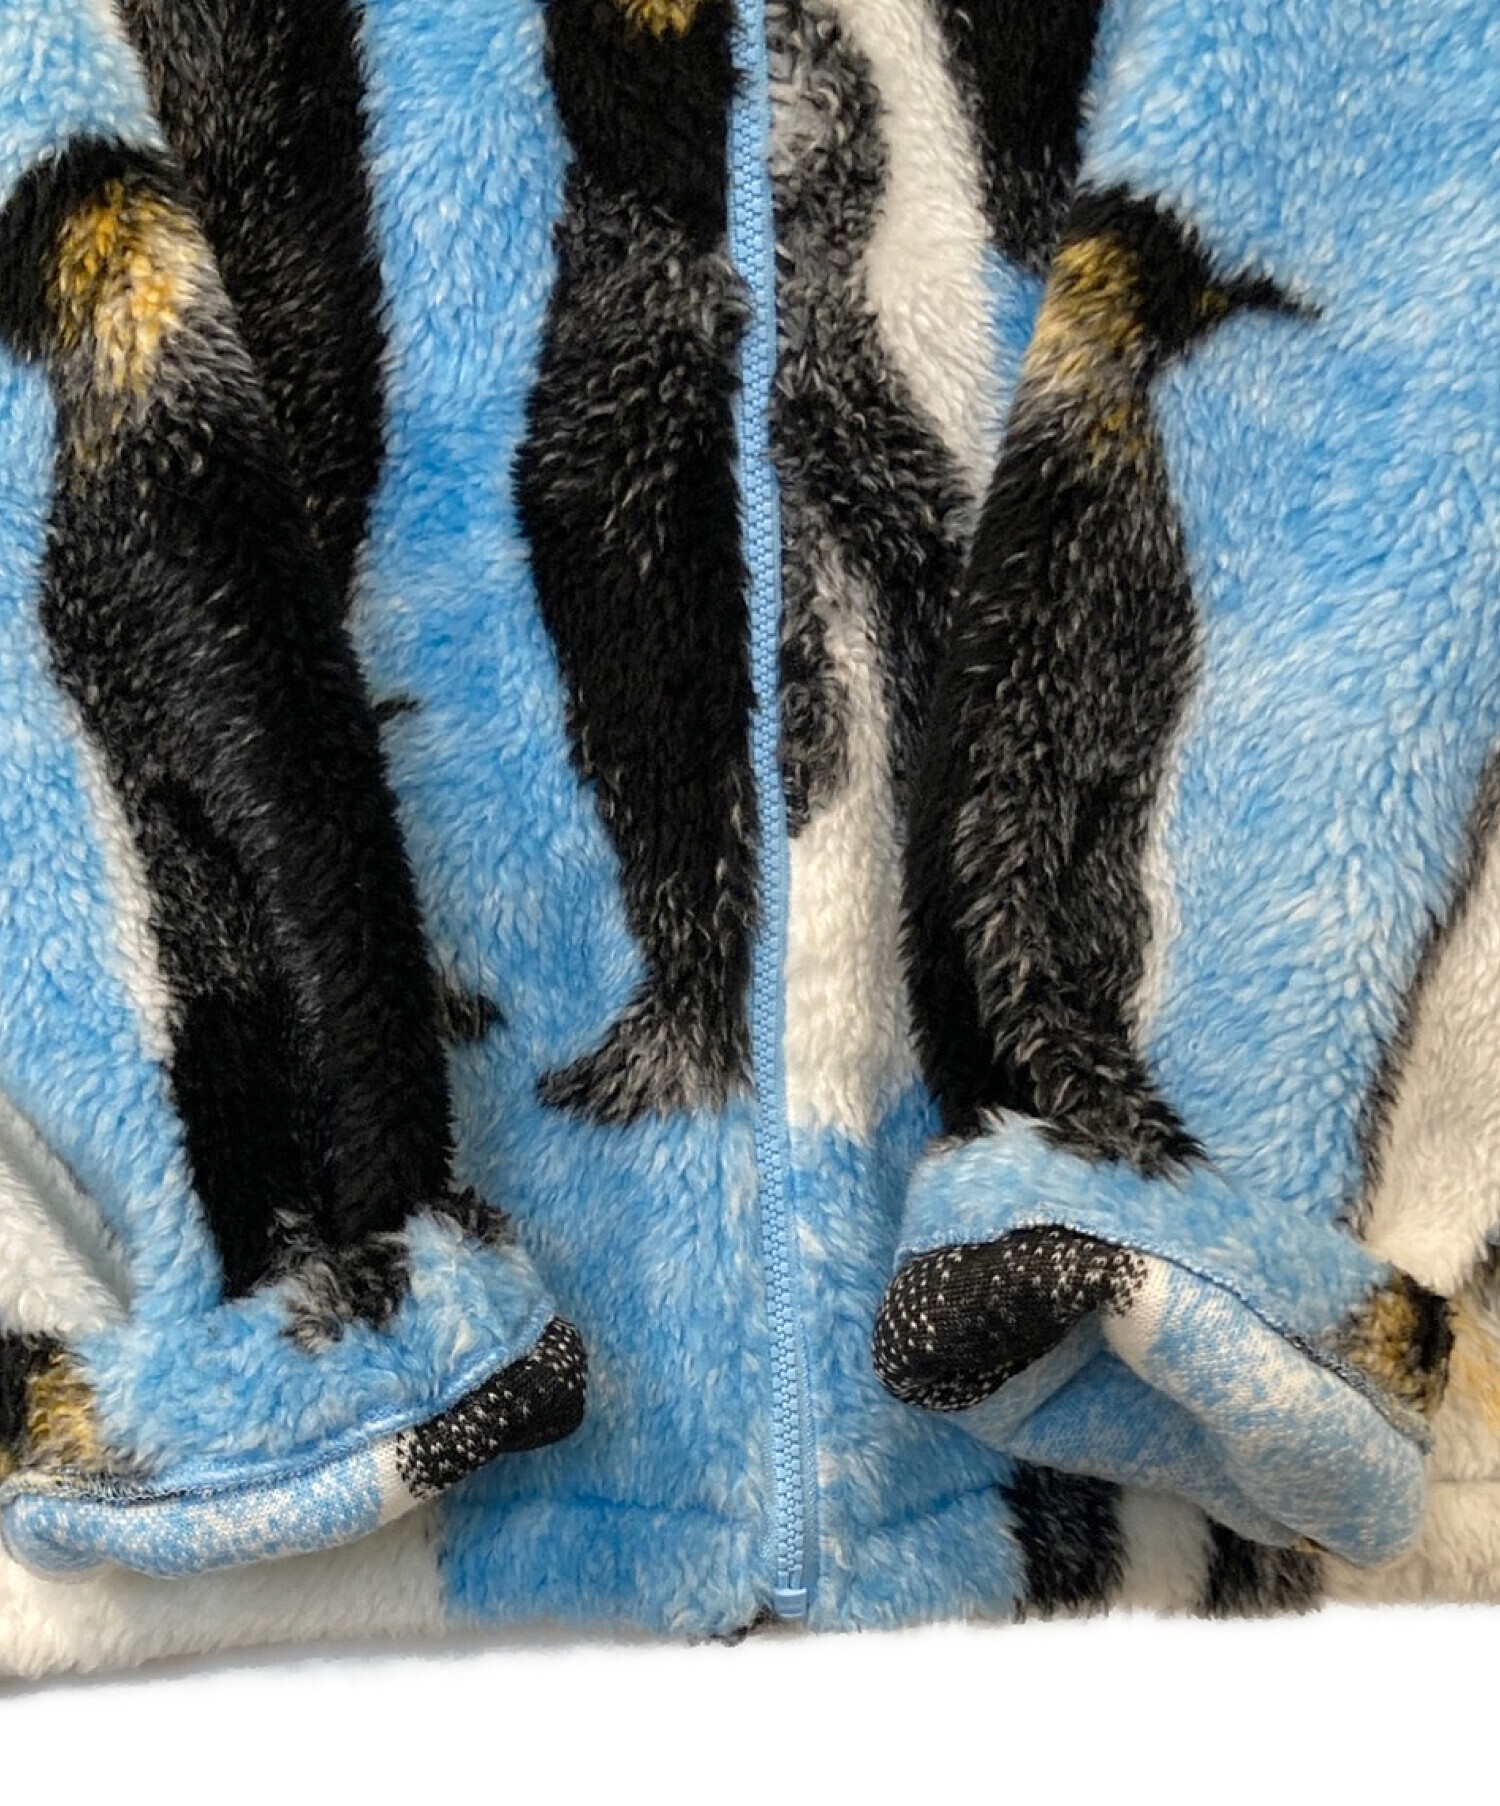 Penguins Hooded Fleece Jacket_XL size